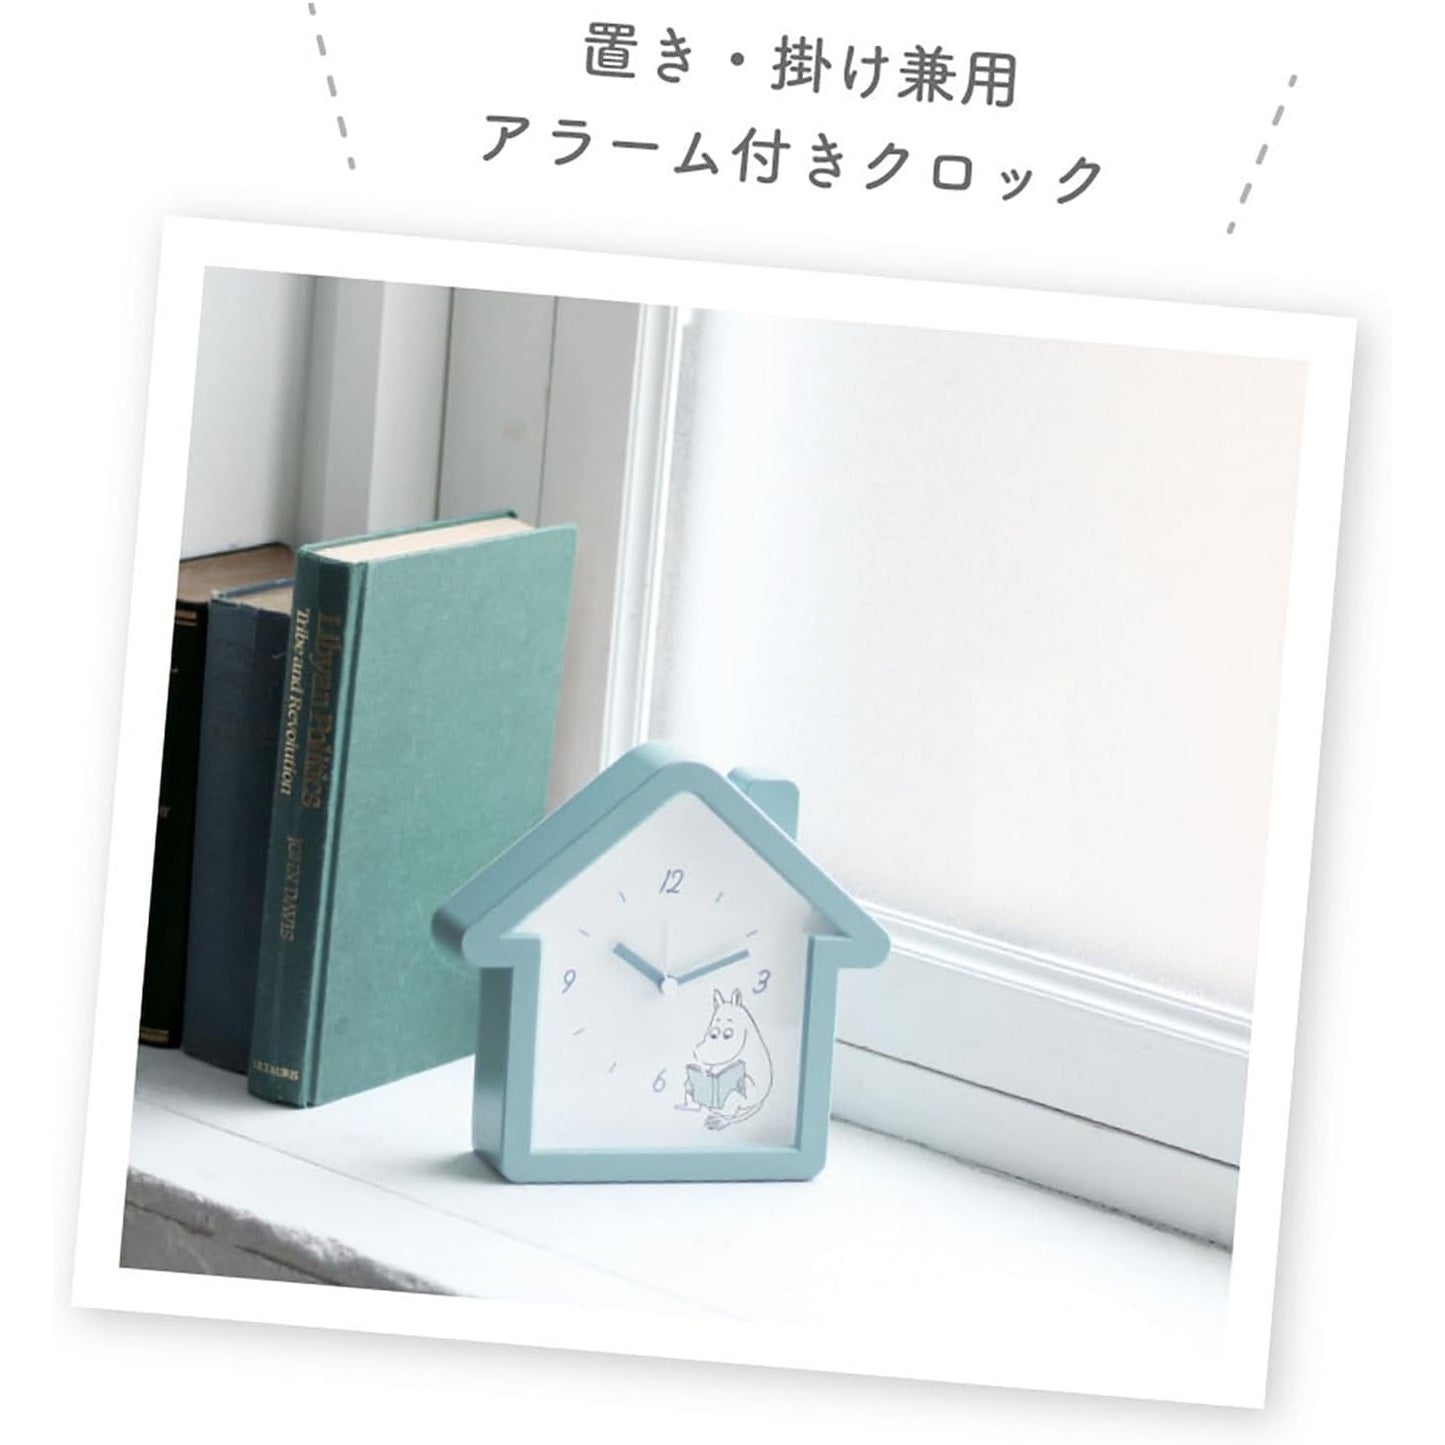 Moomin Wall Clock/Table Clock (Japan Version)